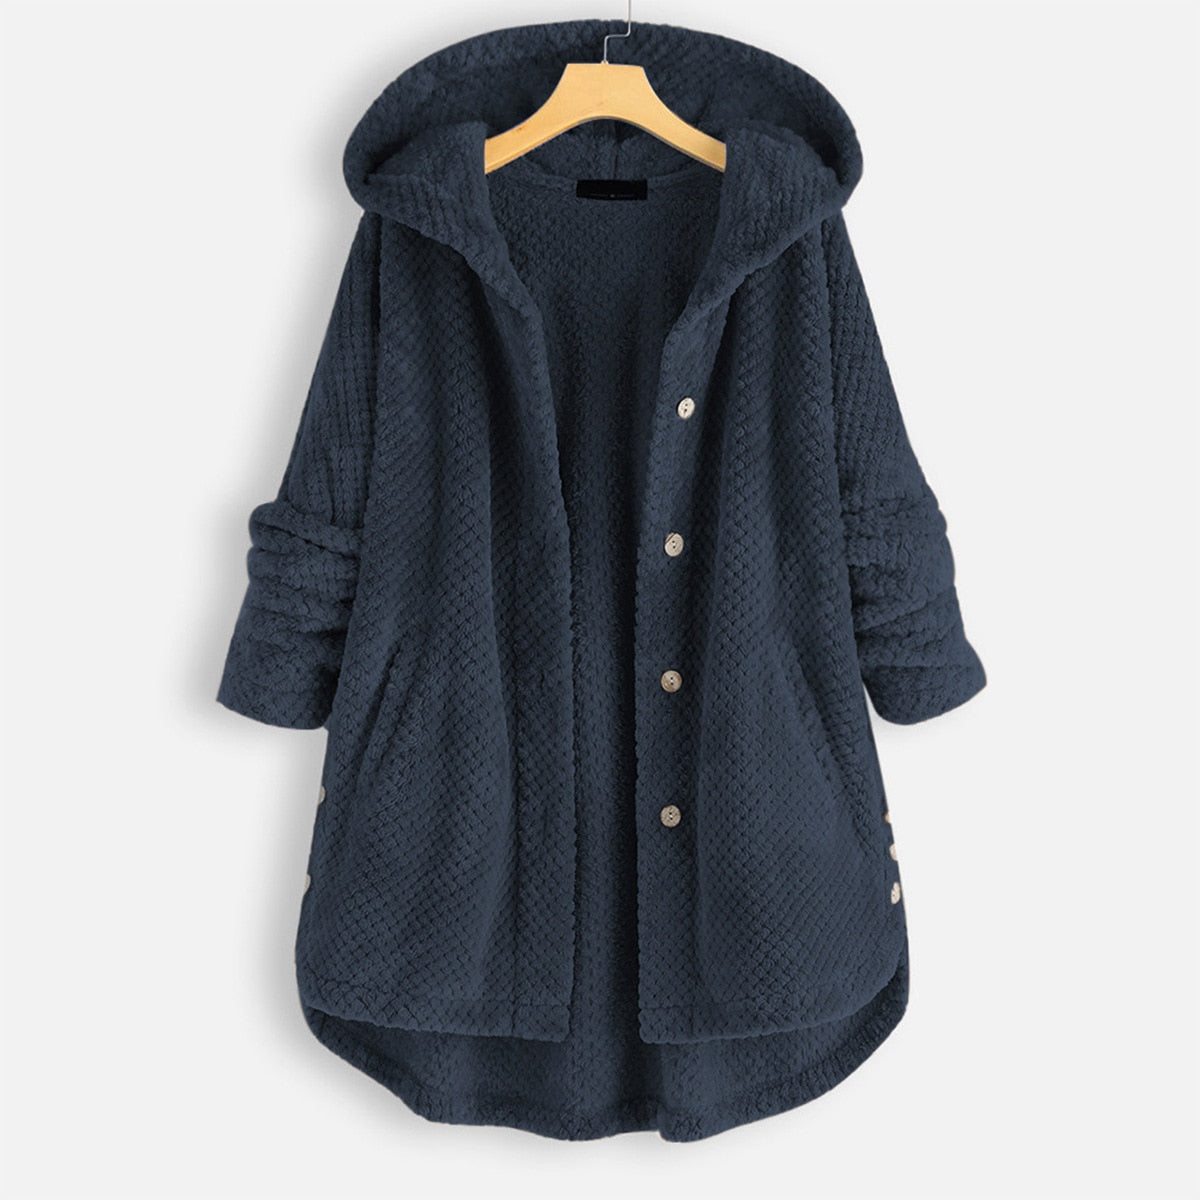 Emmeline™ - Fleece jacket | Stylish and warm through the winter!